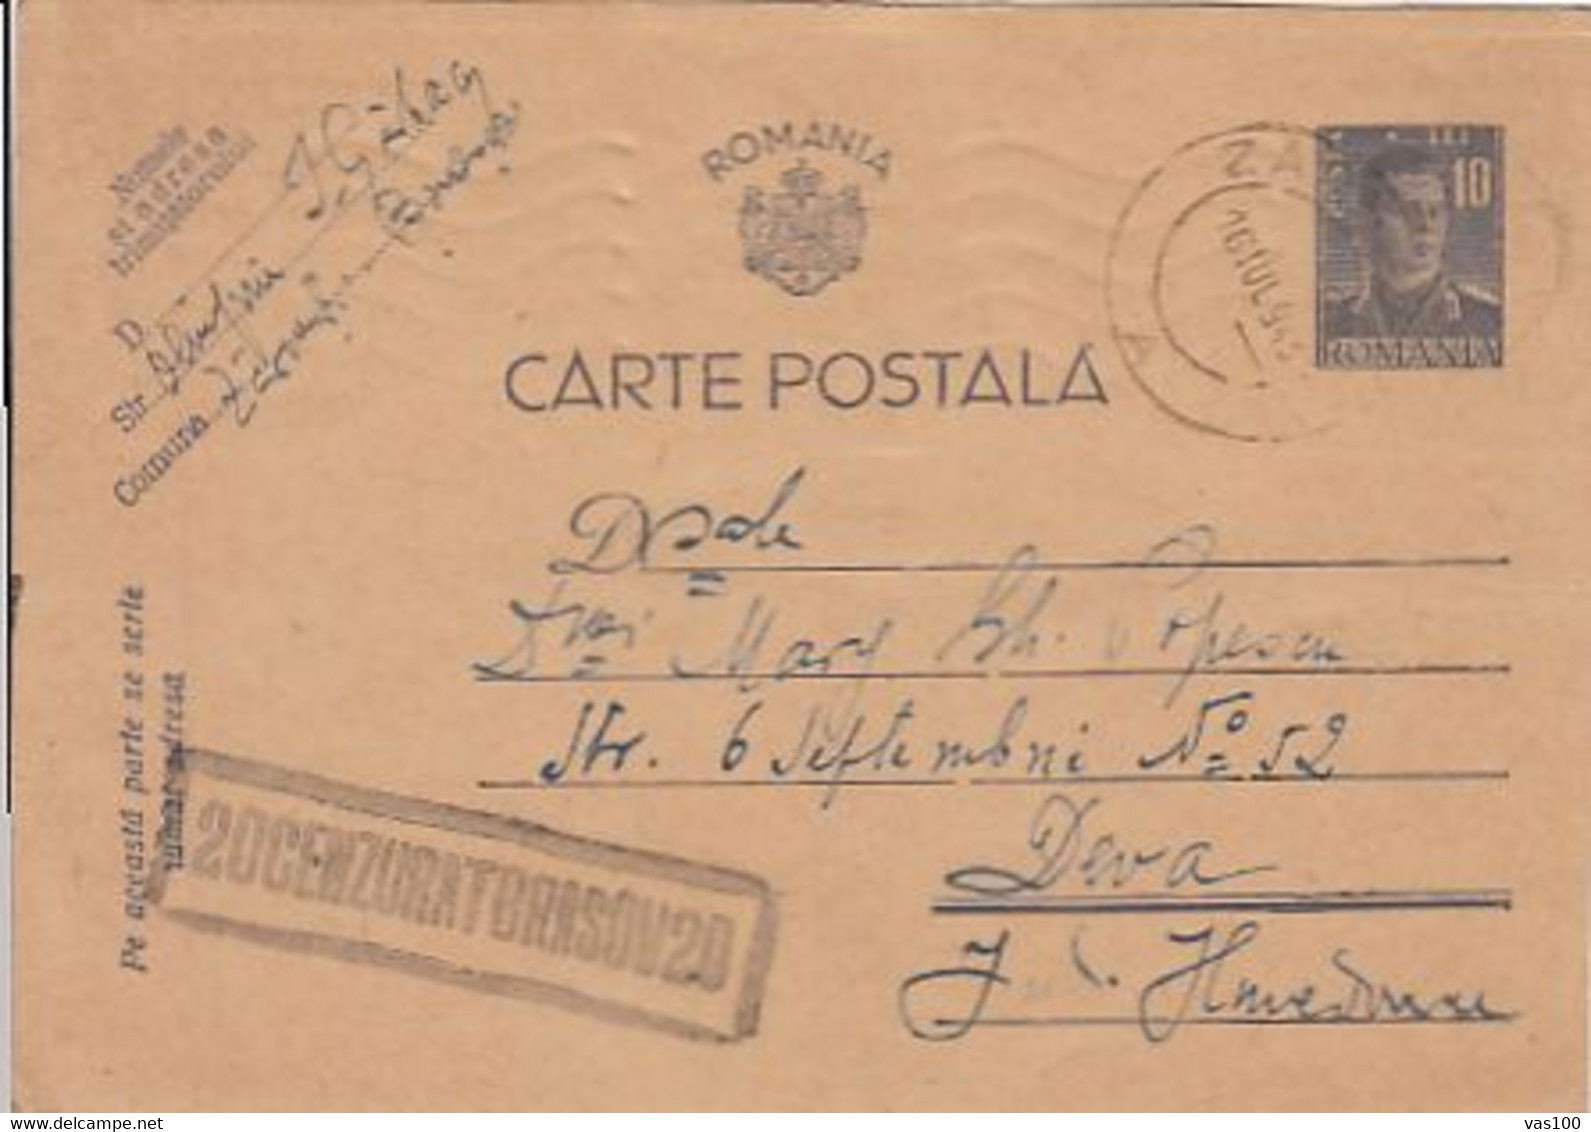 WW2 LETTERS, CENSORED BRASOV NR 20, KING MICHAEL PC STATIONERY, ENTIER POSTAL, 1943, ROMANIA - Storia Postale Seconda Guerra Mondiale